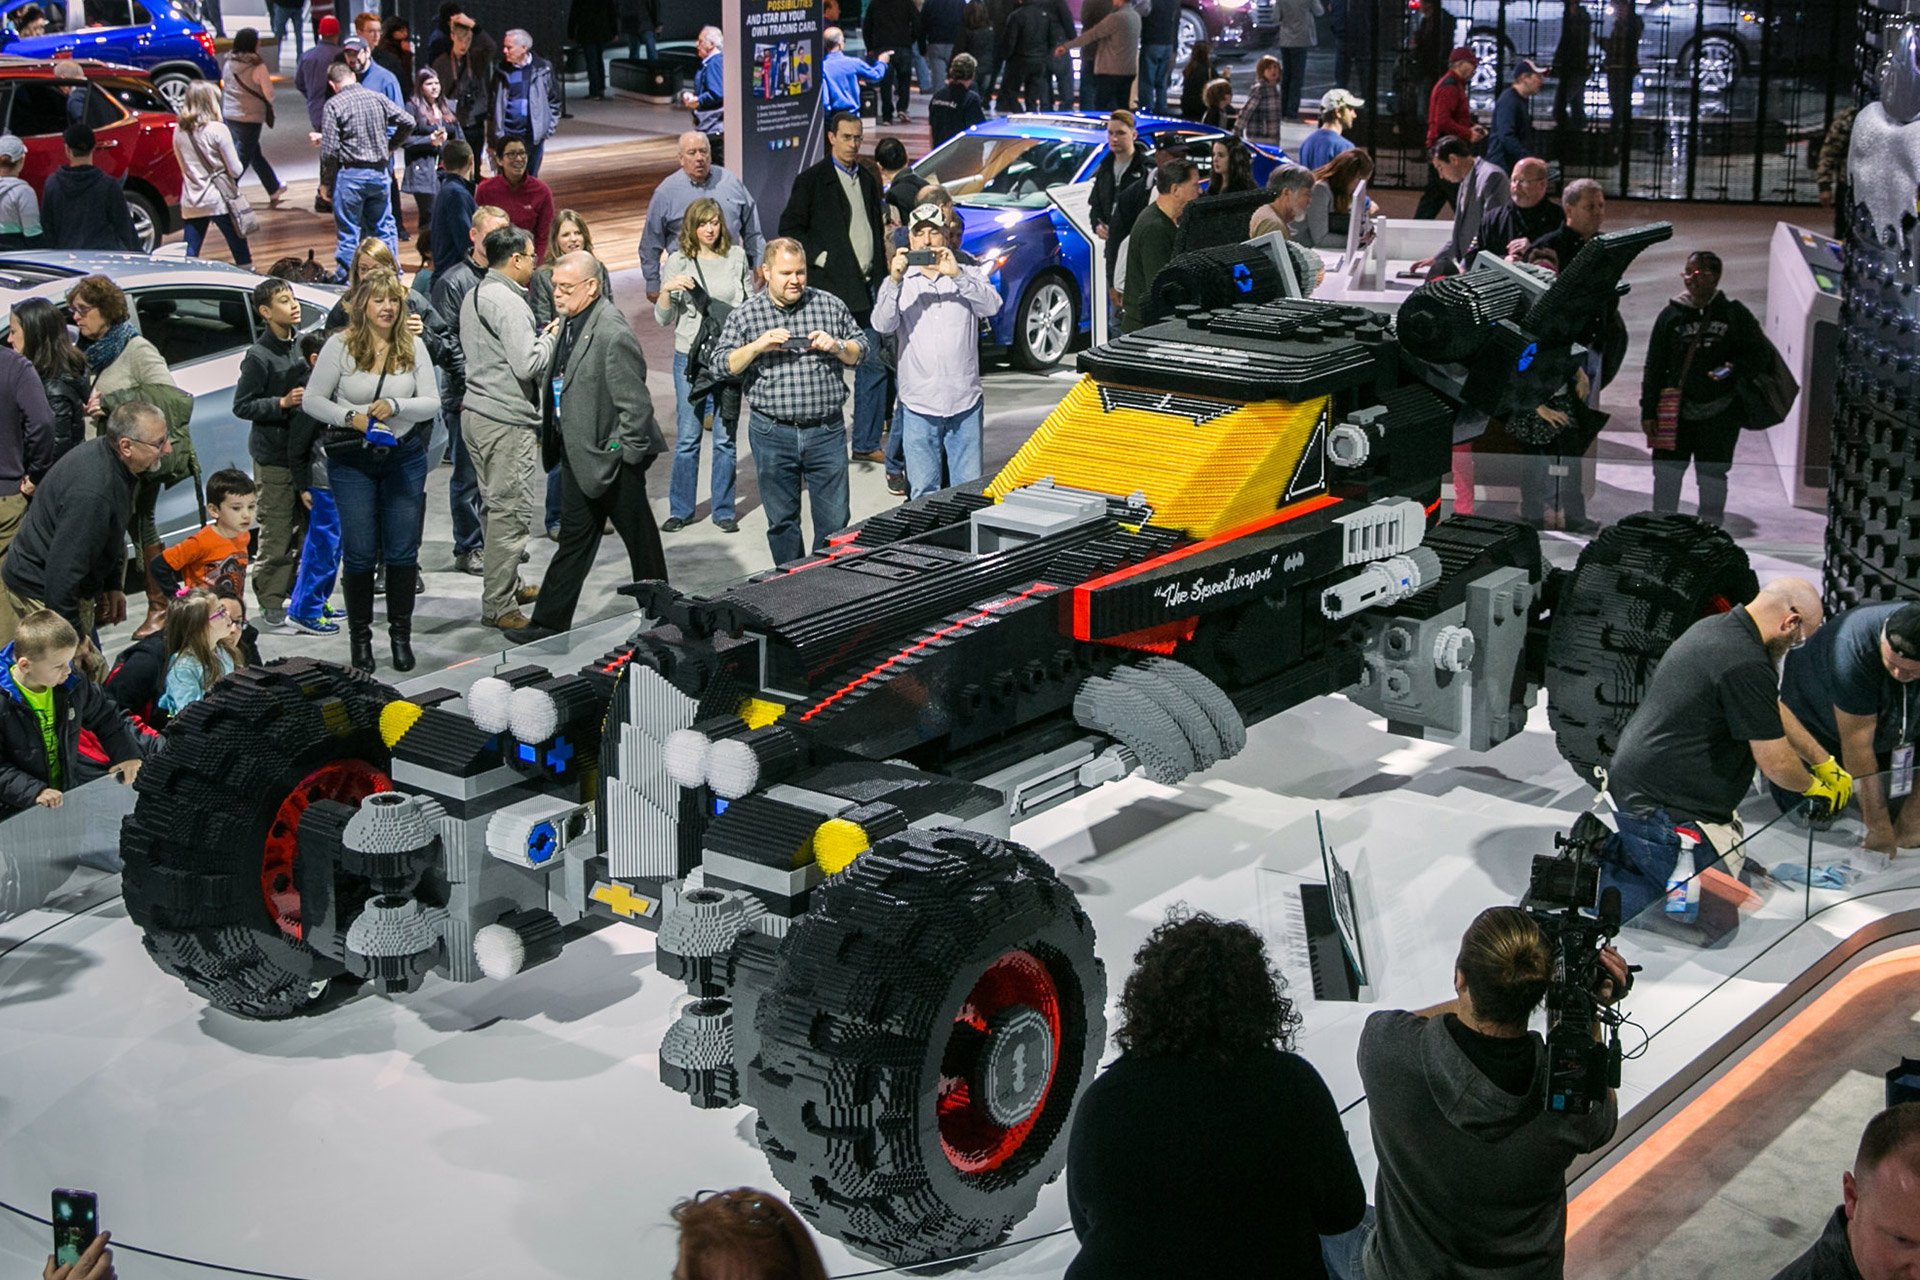 Chevy LEGO Batmobile